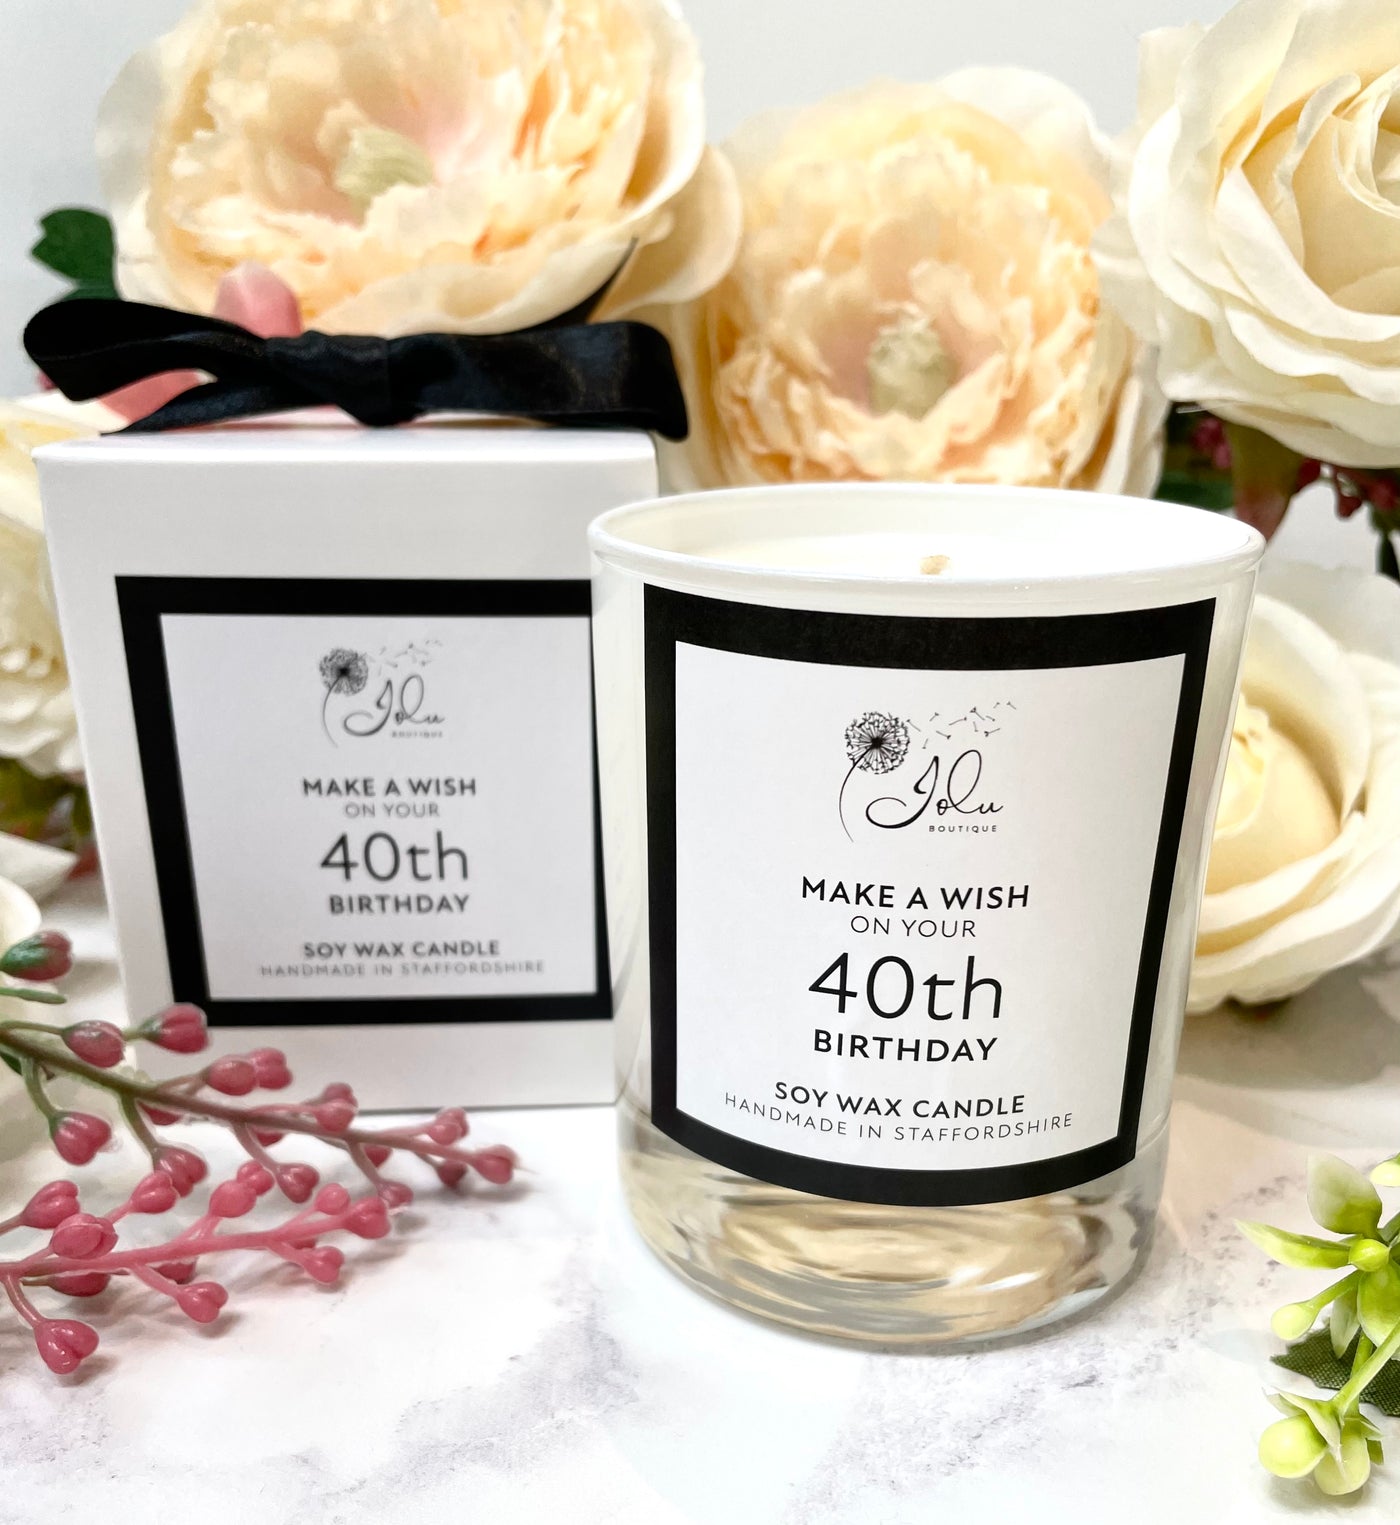 Jolu Boutique Make a Wish Sentiment Candle - 40th Birthday